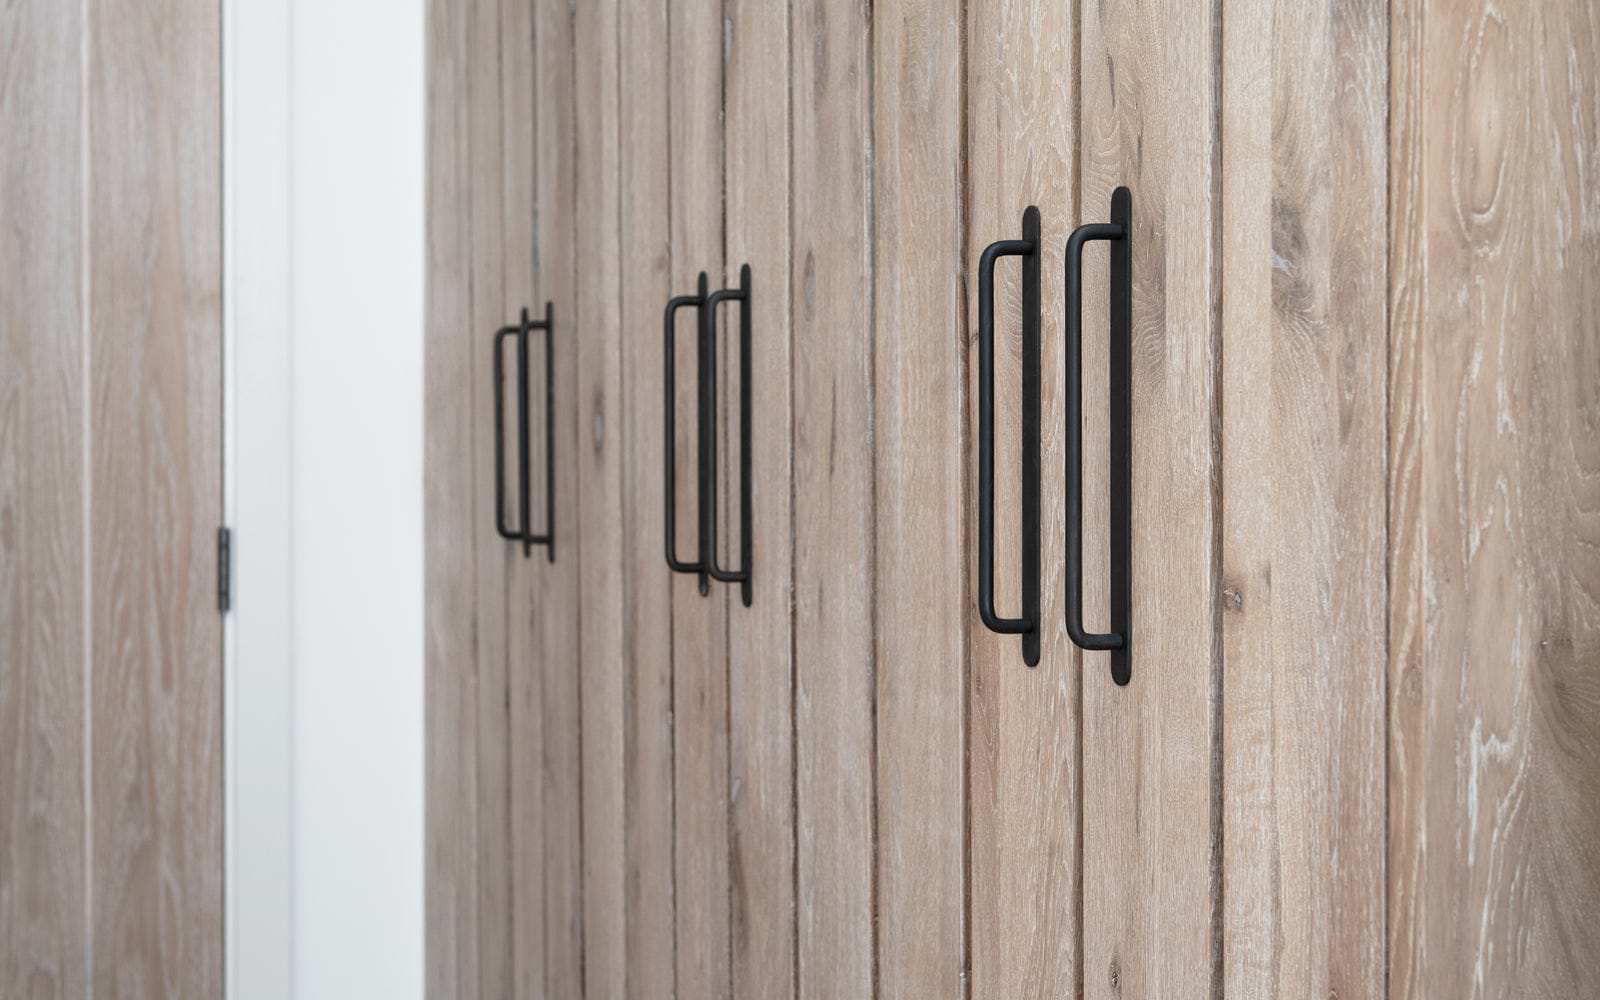 Corston bronze kilburn furniture handle on wooden slated doors